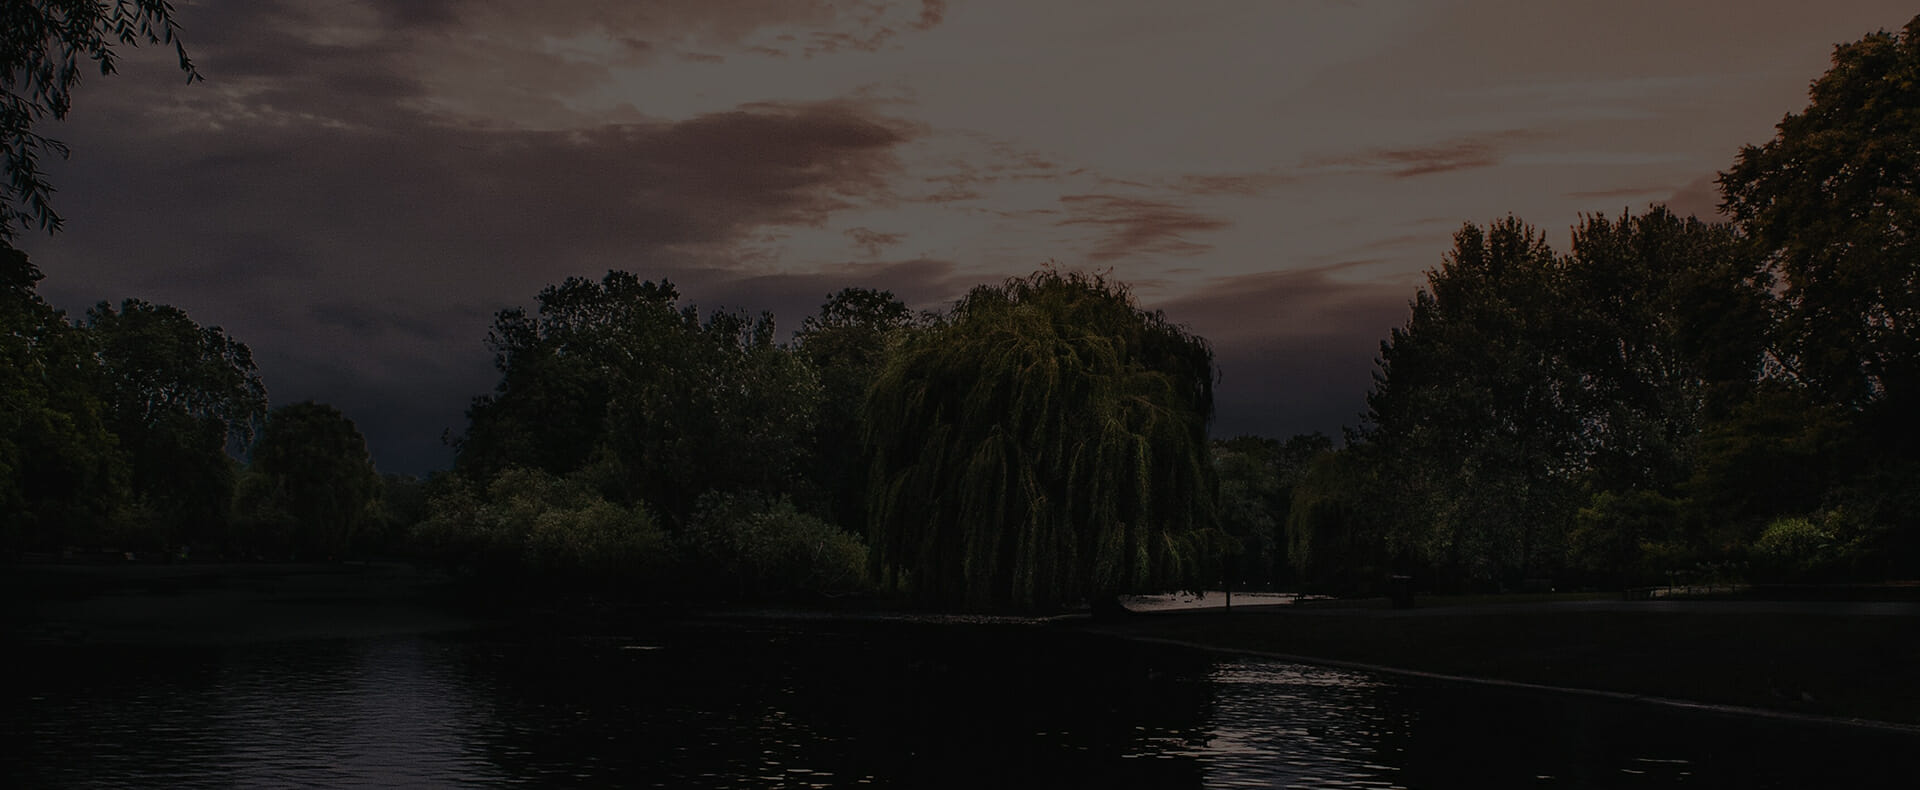 regents park in london trees surrounding lake cloudy sky